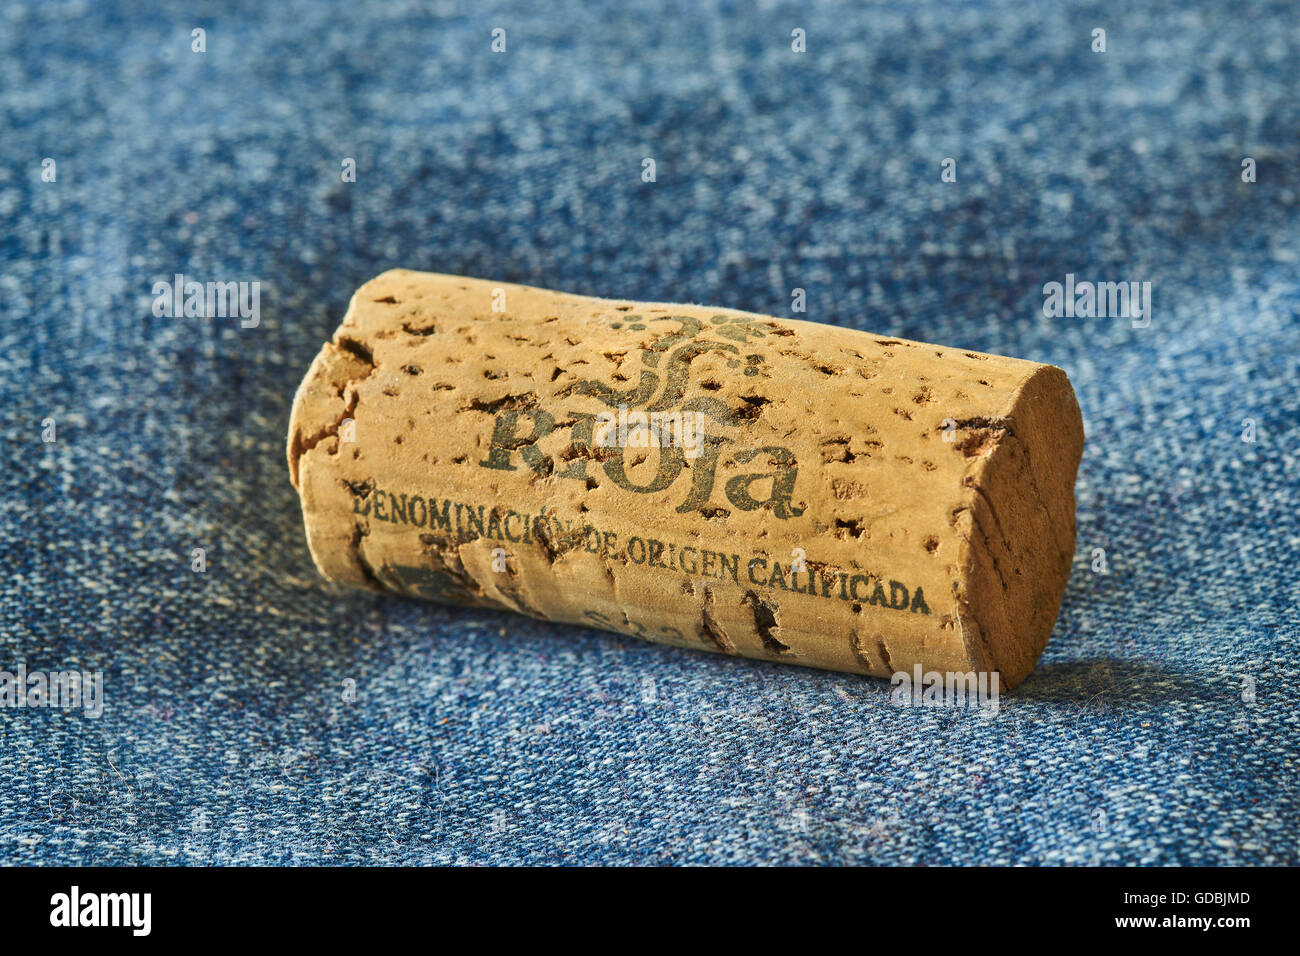 Rioja spanish wine cork stopper Stock Photo